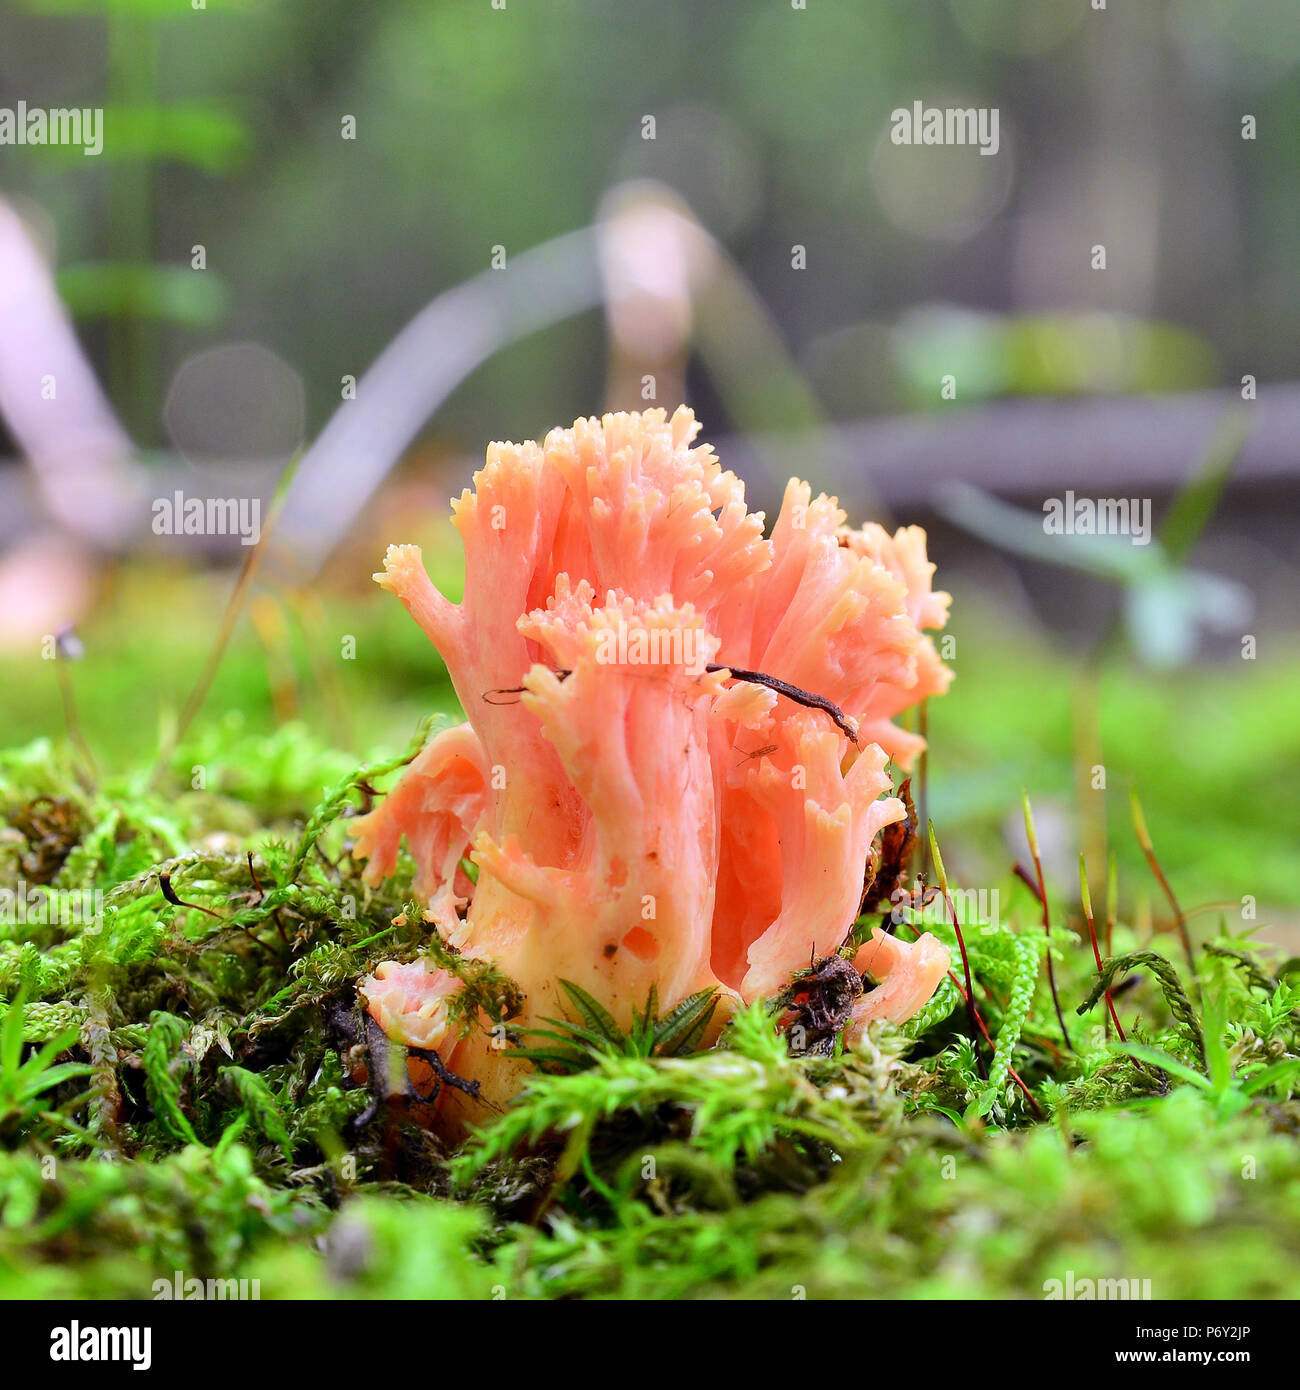 ramaria formosa mushroom on the ground Stock Photo